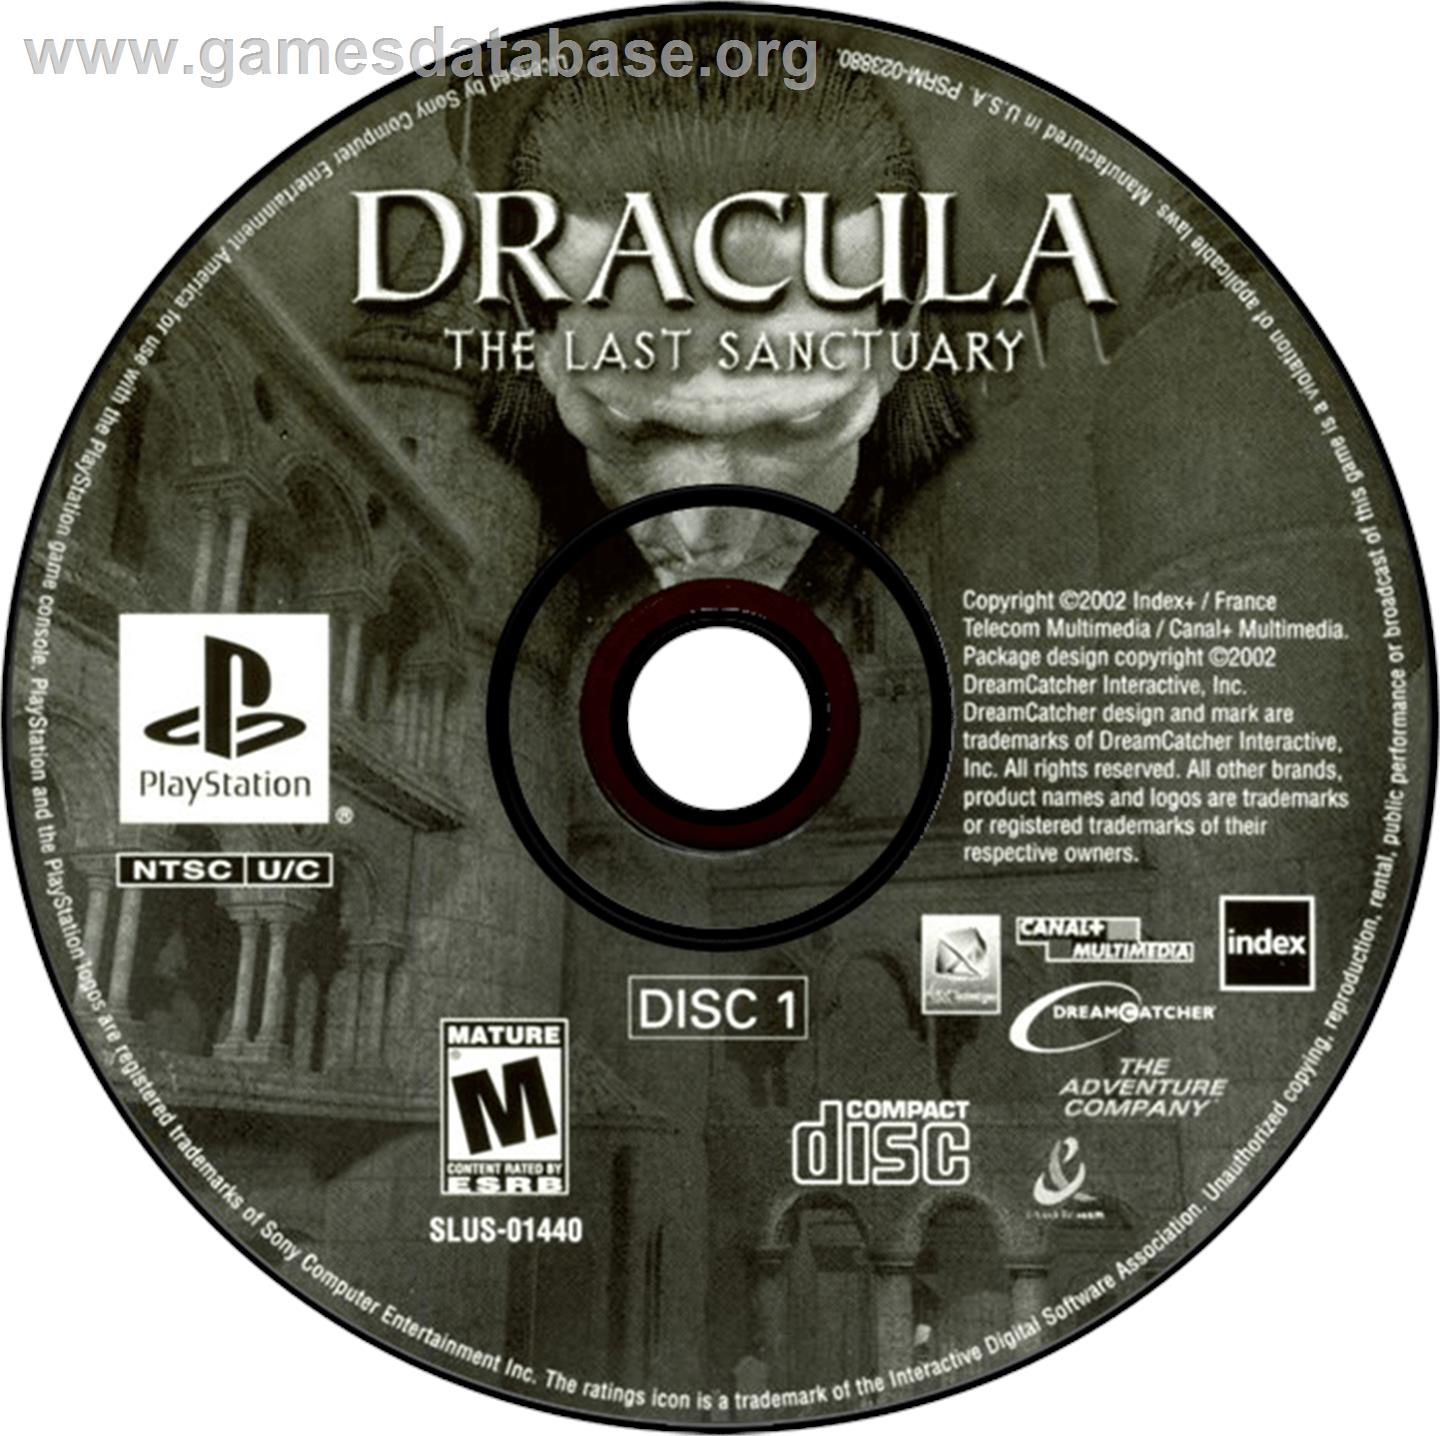 Dracula: The Last Sanctuary - Sony Playstation - Artwork - Disc